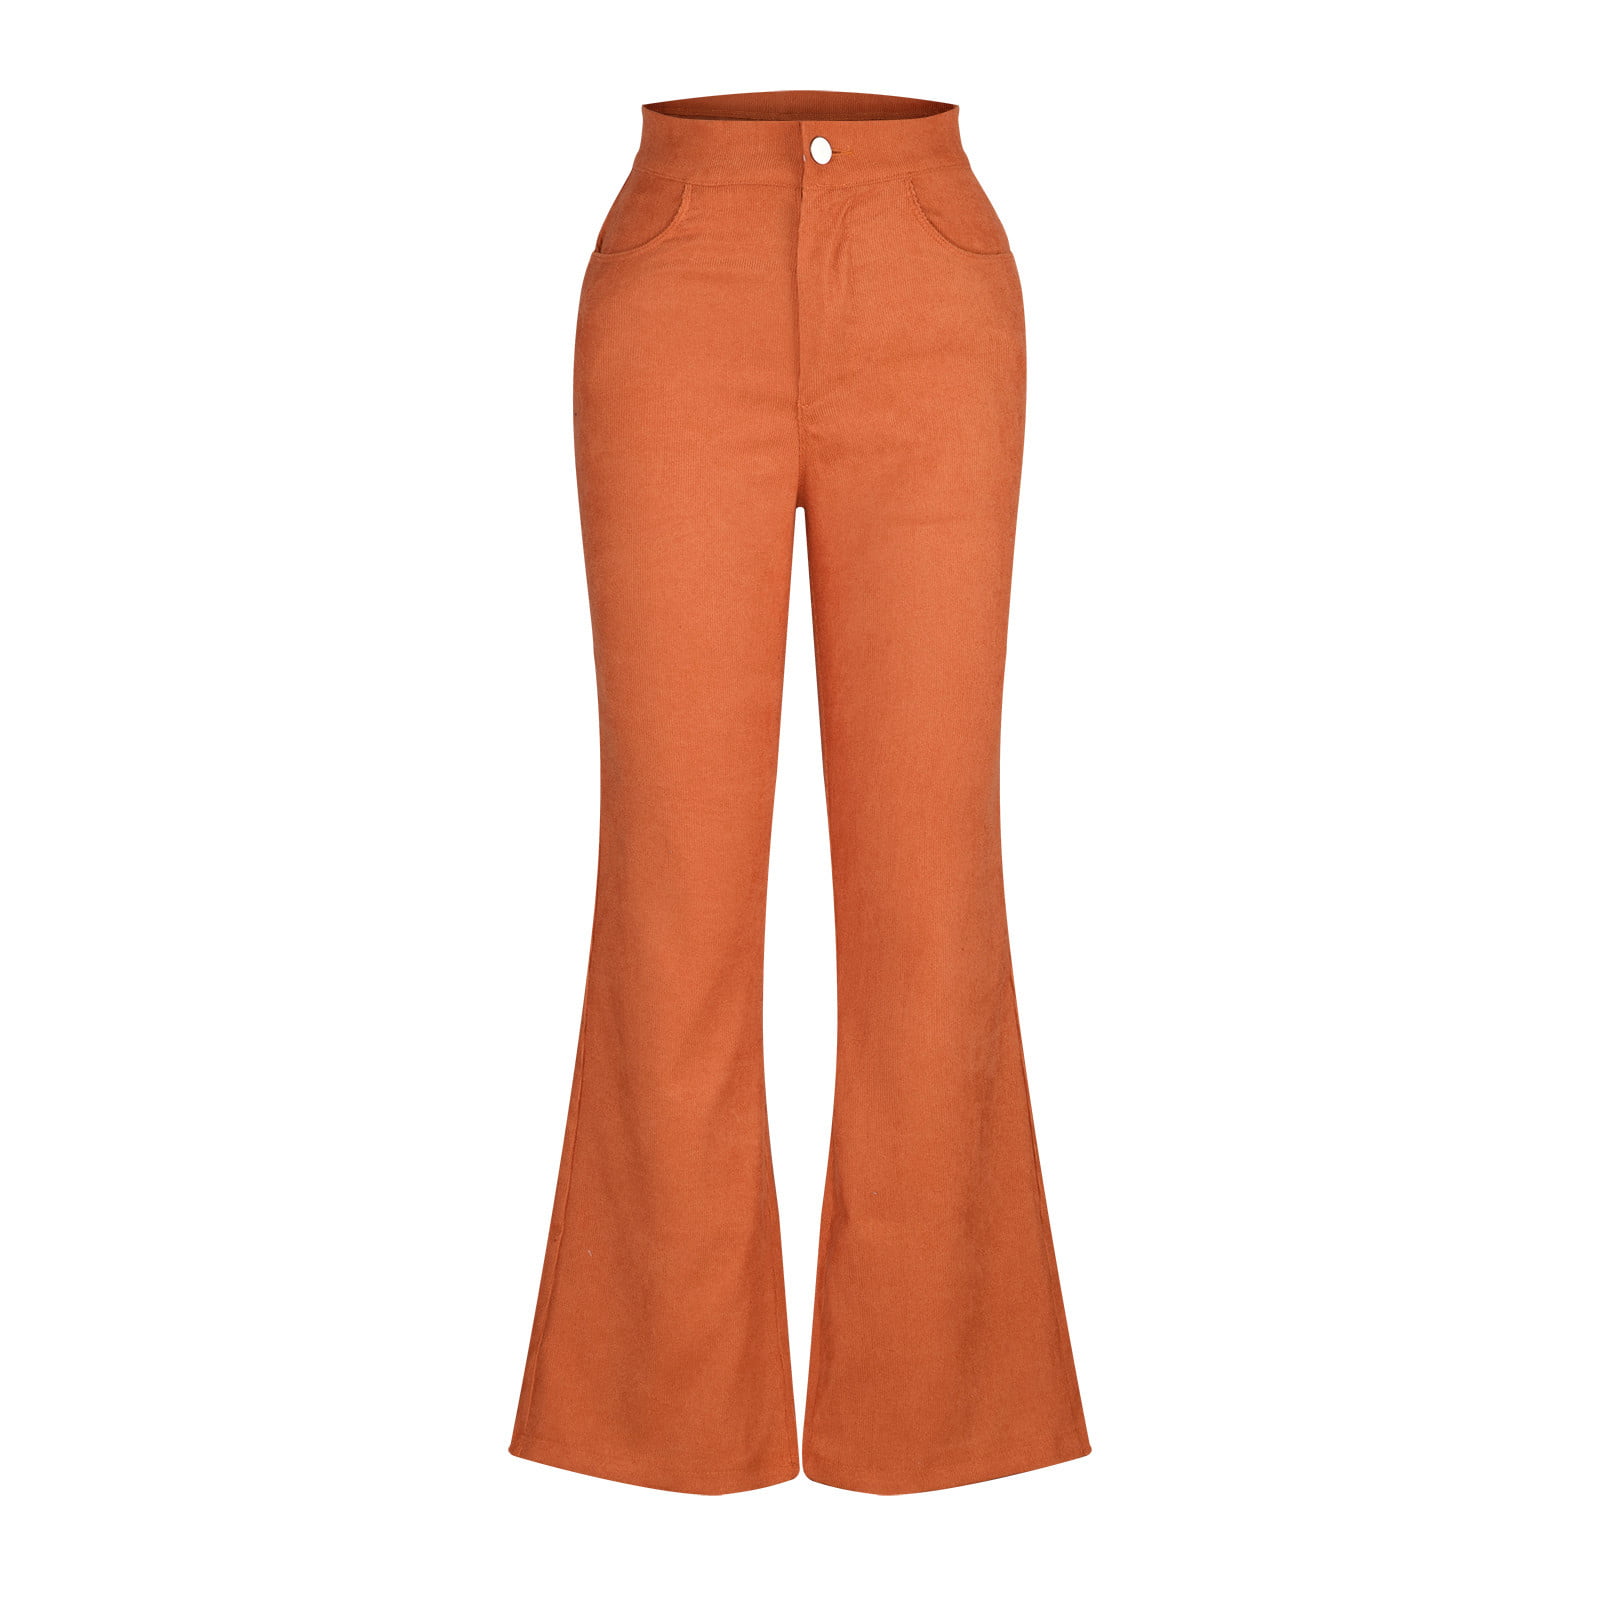 Hfyihgf Women Elegant Corduroy Flare Pants Elastic High Waist Vintage Bell  Bottom Trousers with Pockets(Orange,S) 